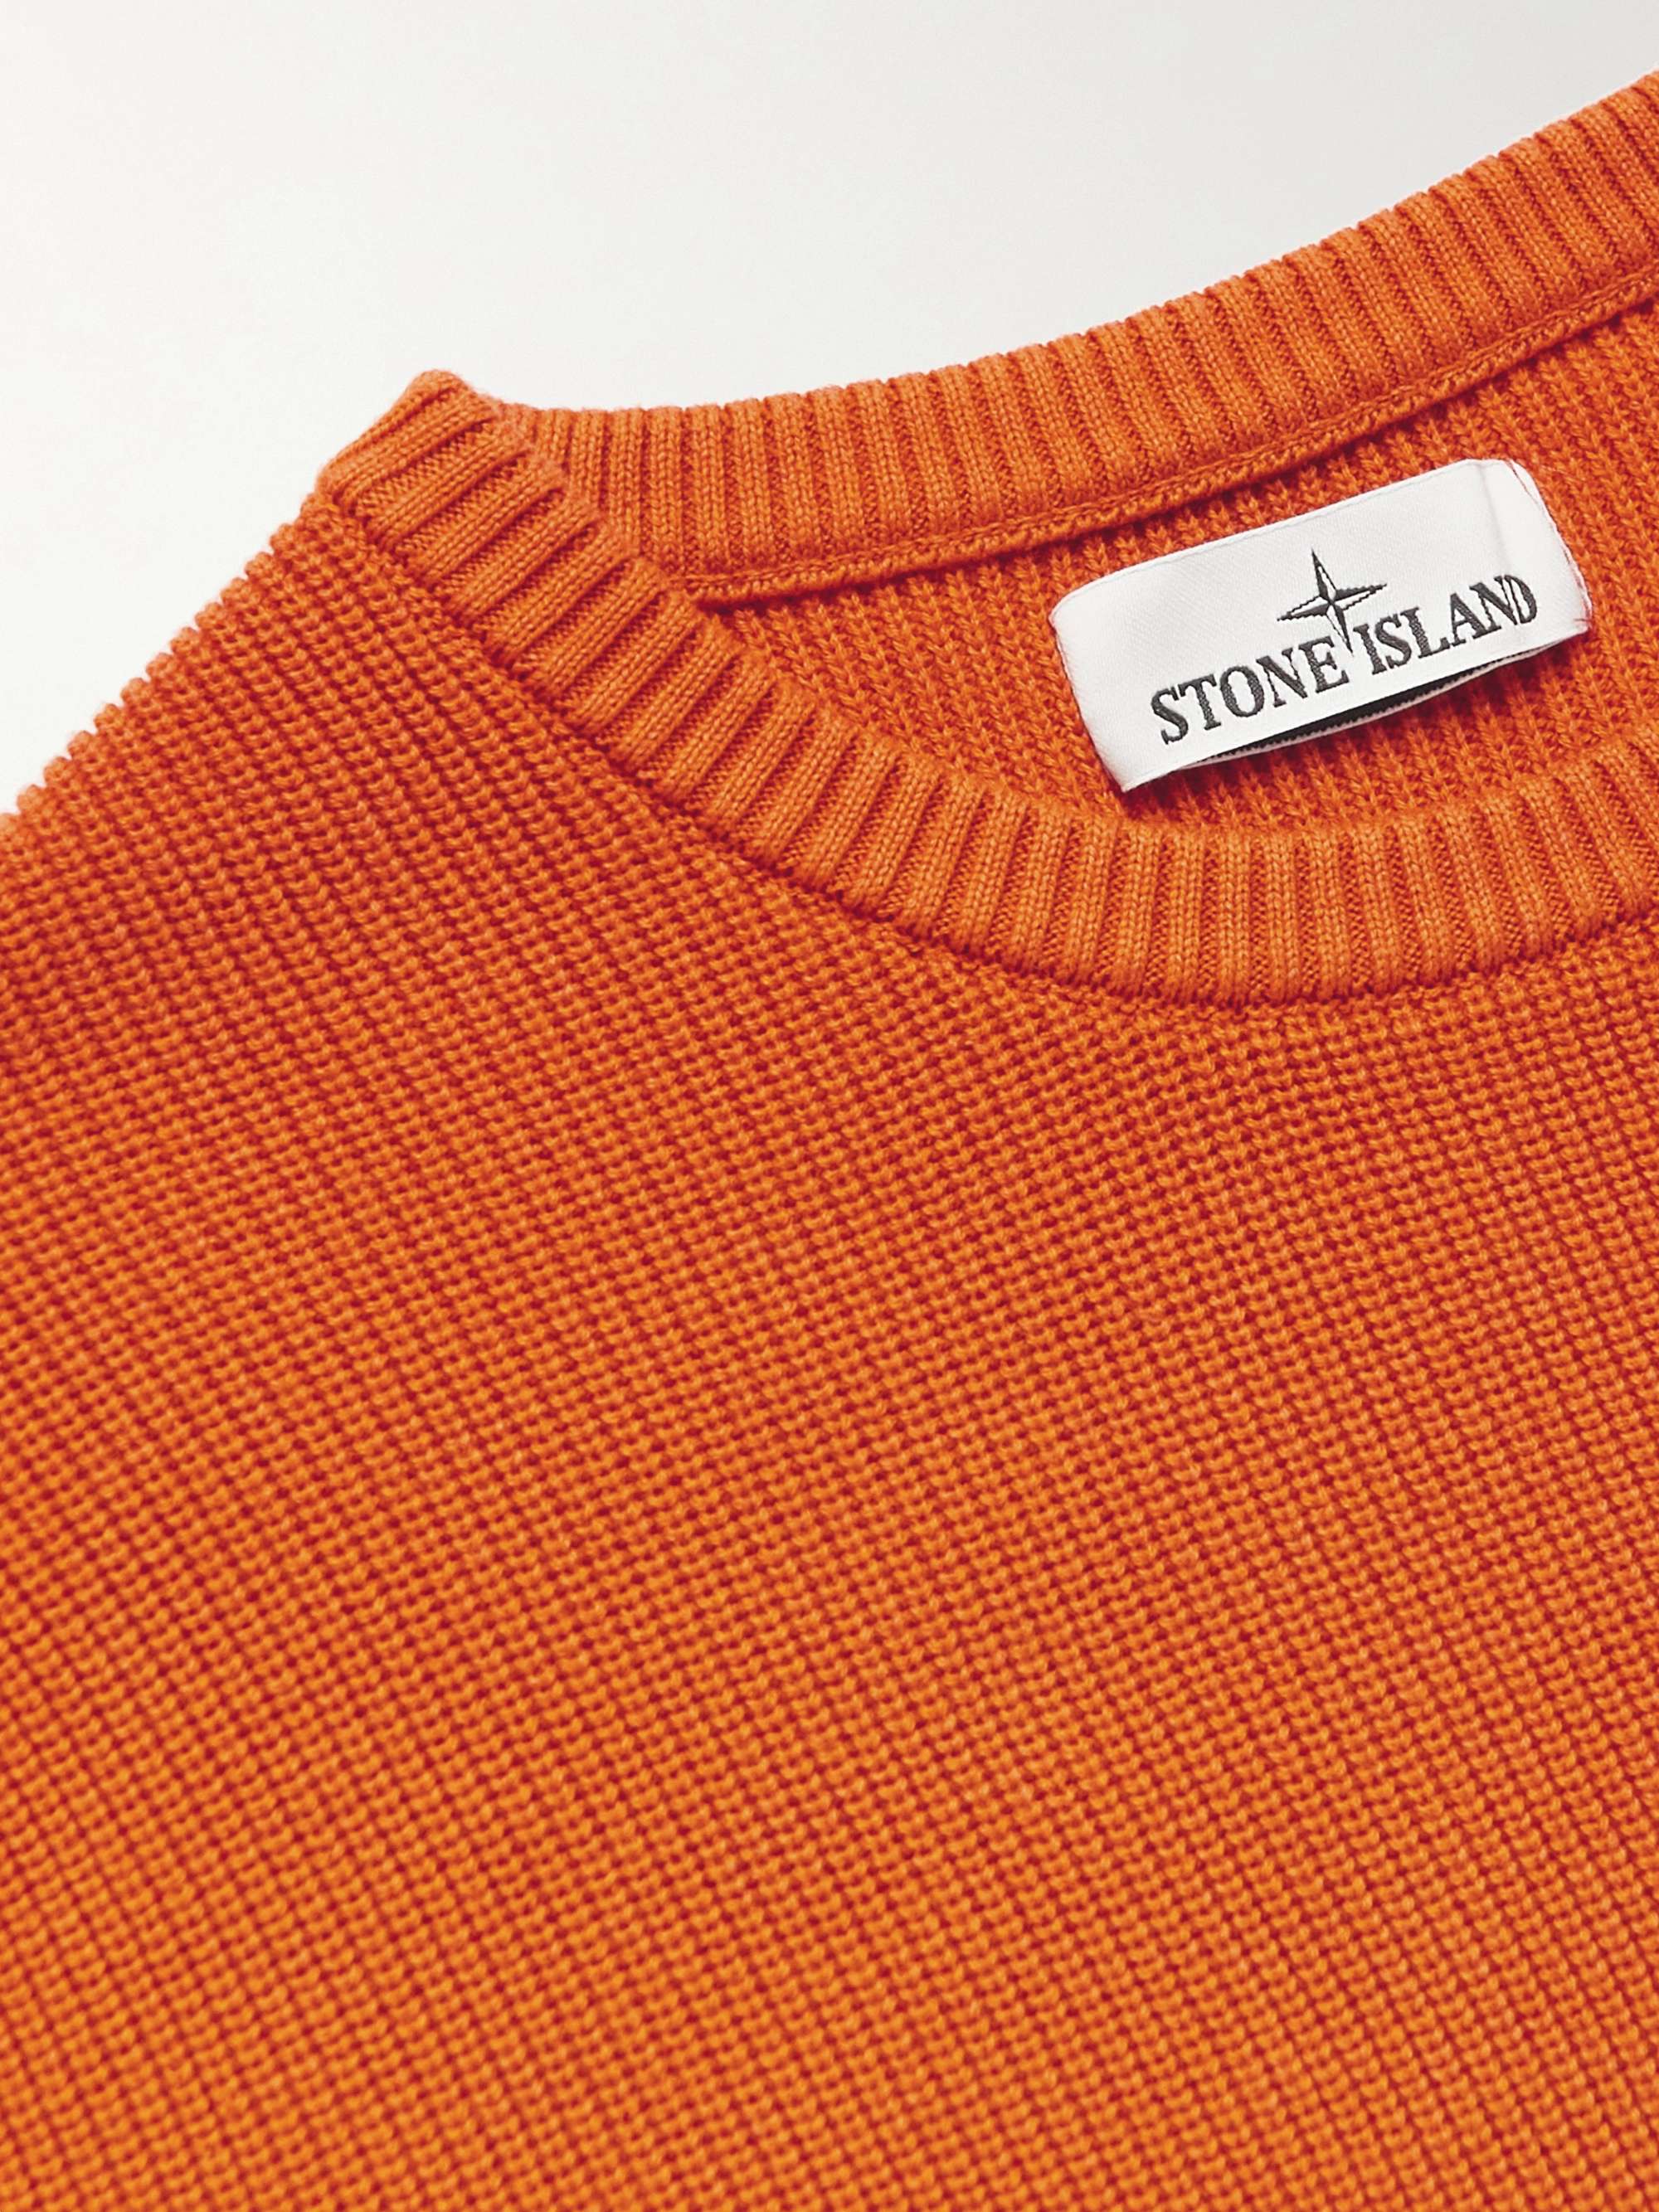 STONE ISLAND Logo-Appliquéd Cotton Sweater